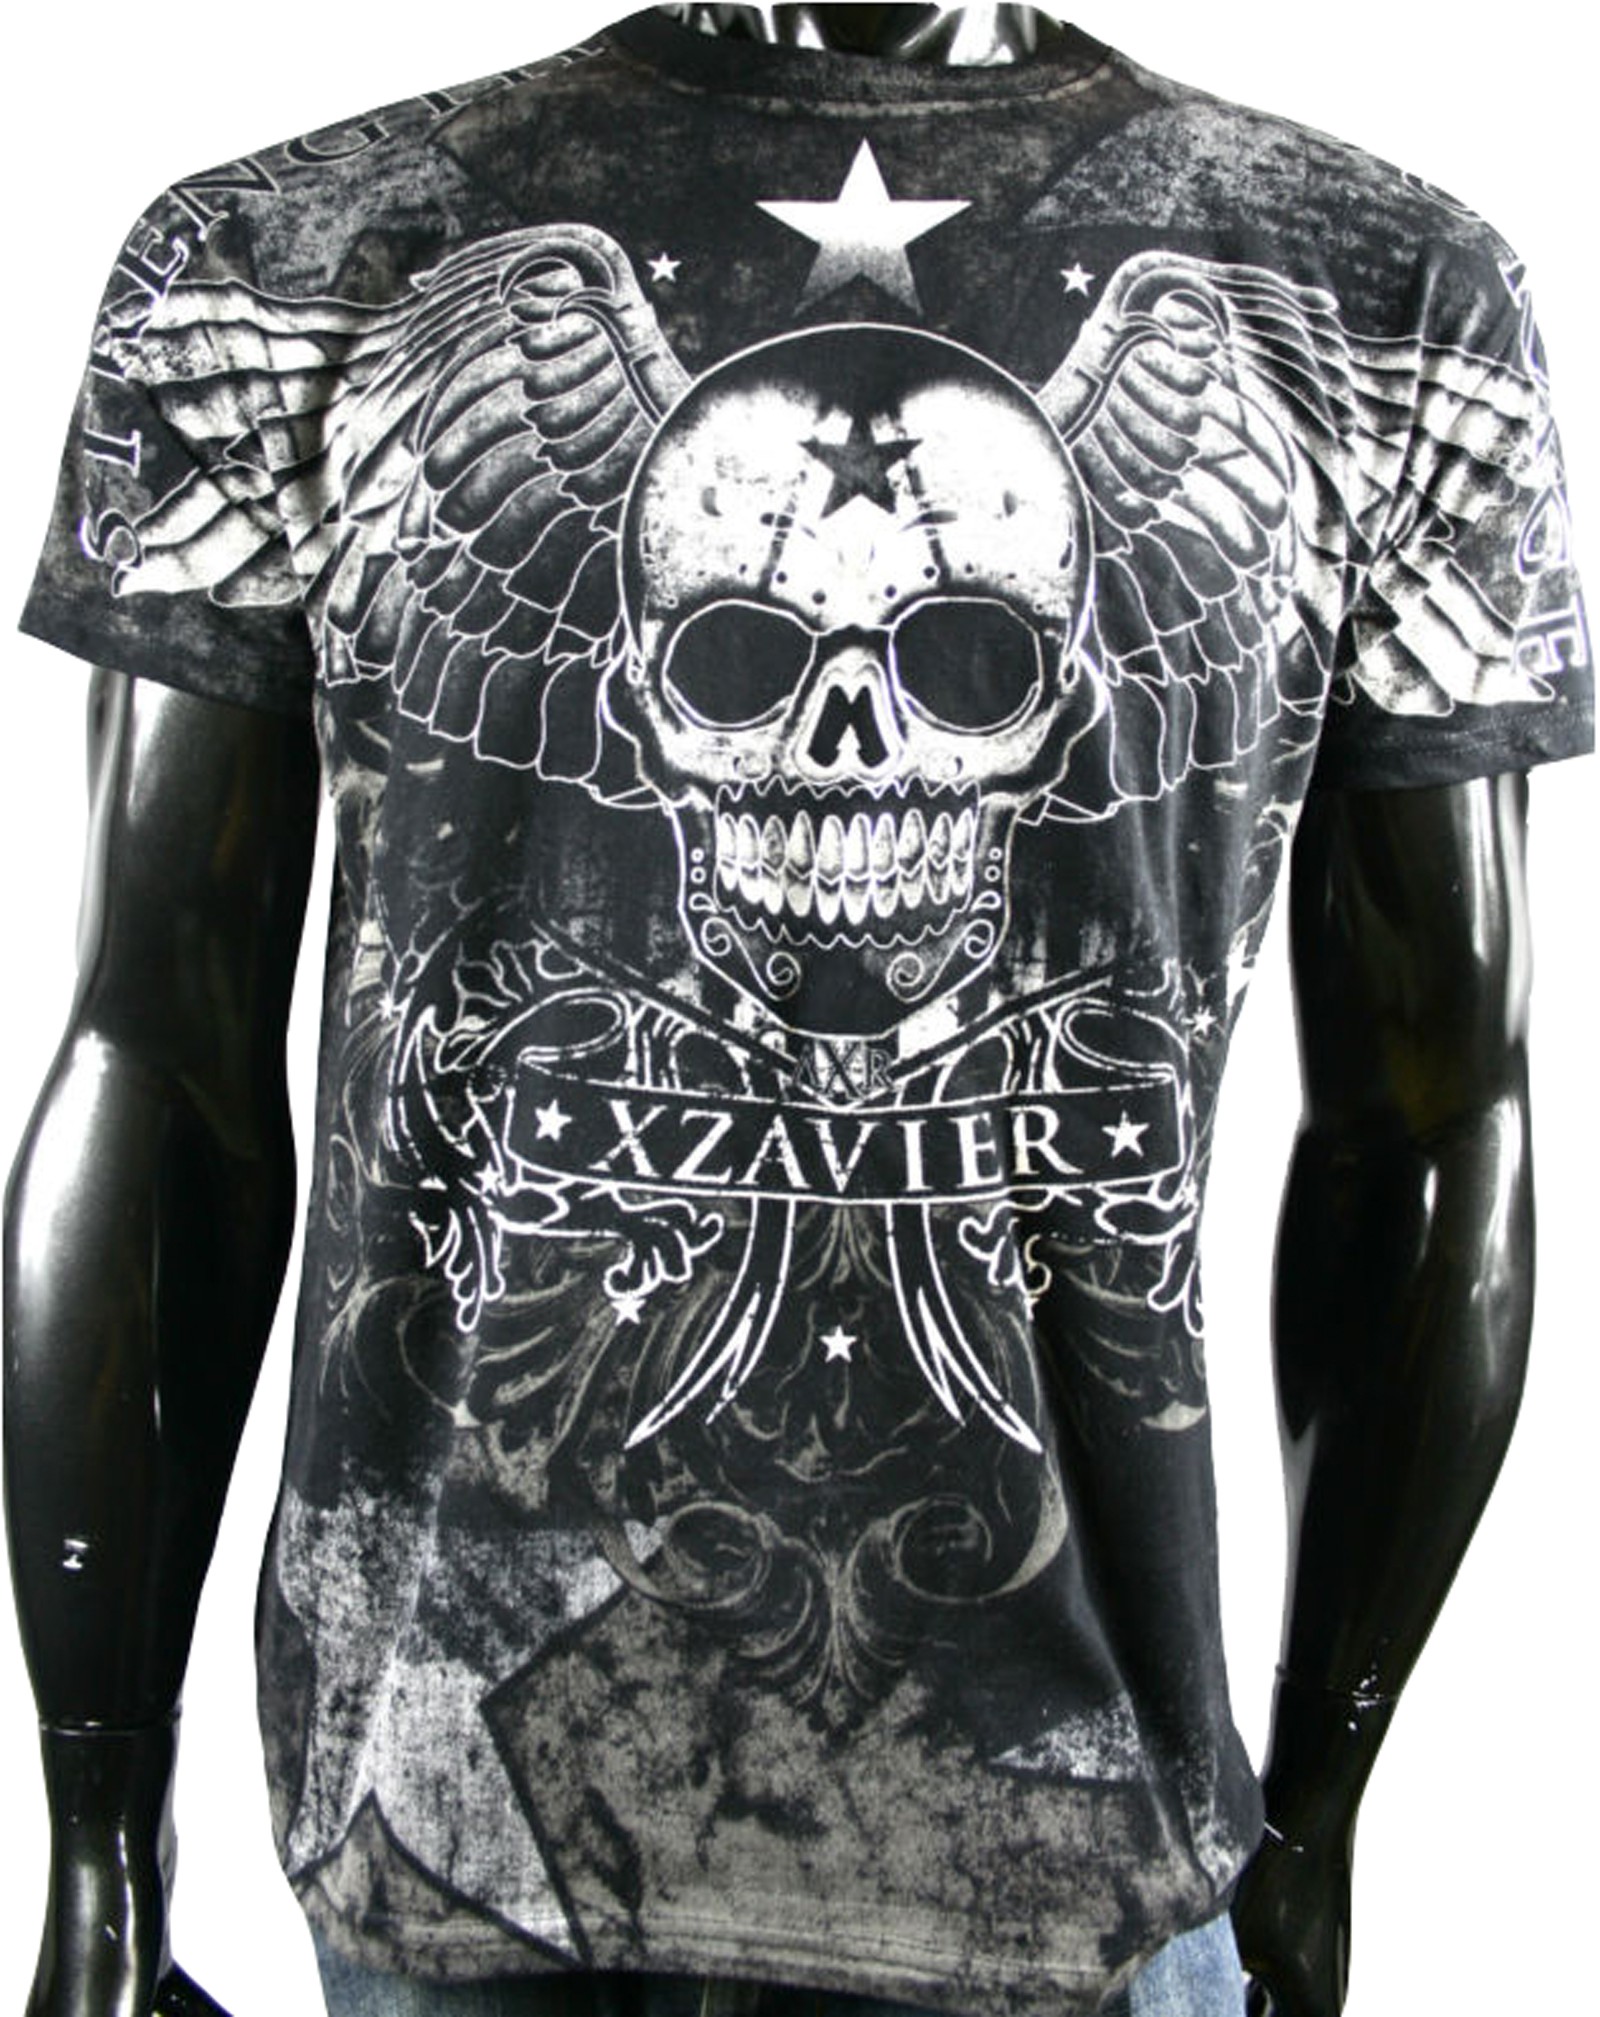 Xzavier - Star Gazer Skull T-Shirt Front